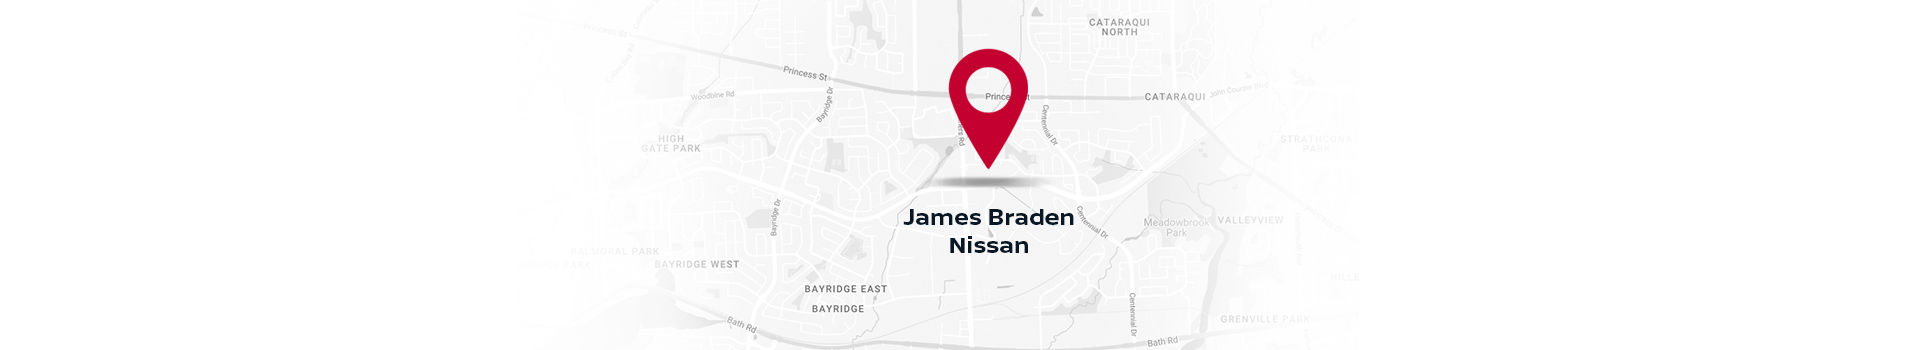 James Braden Nissan